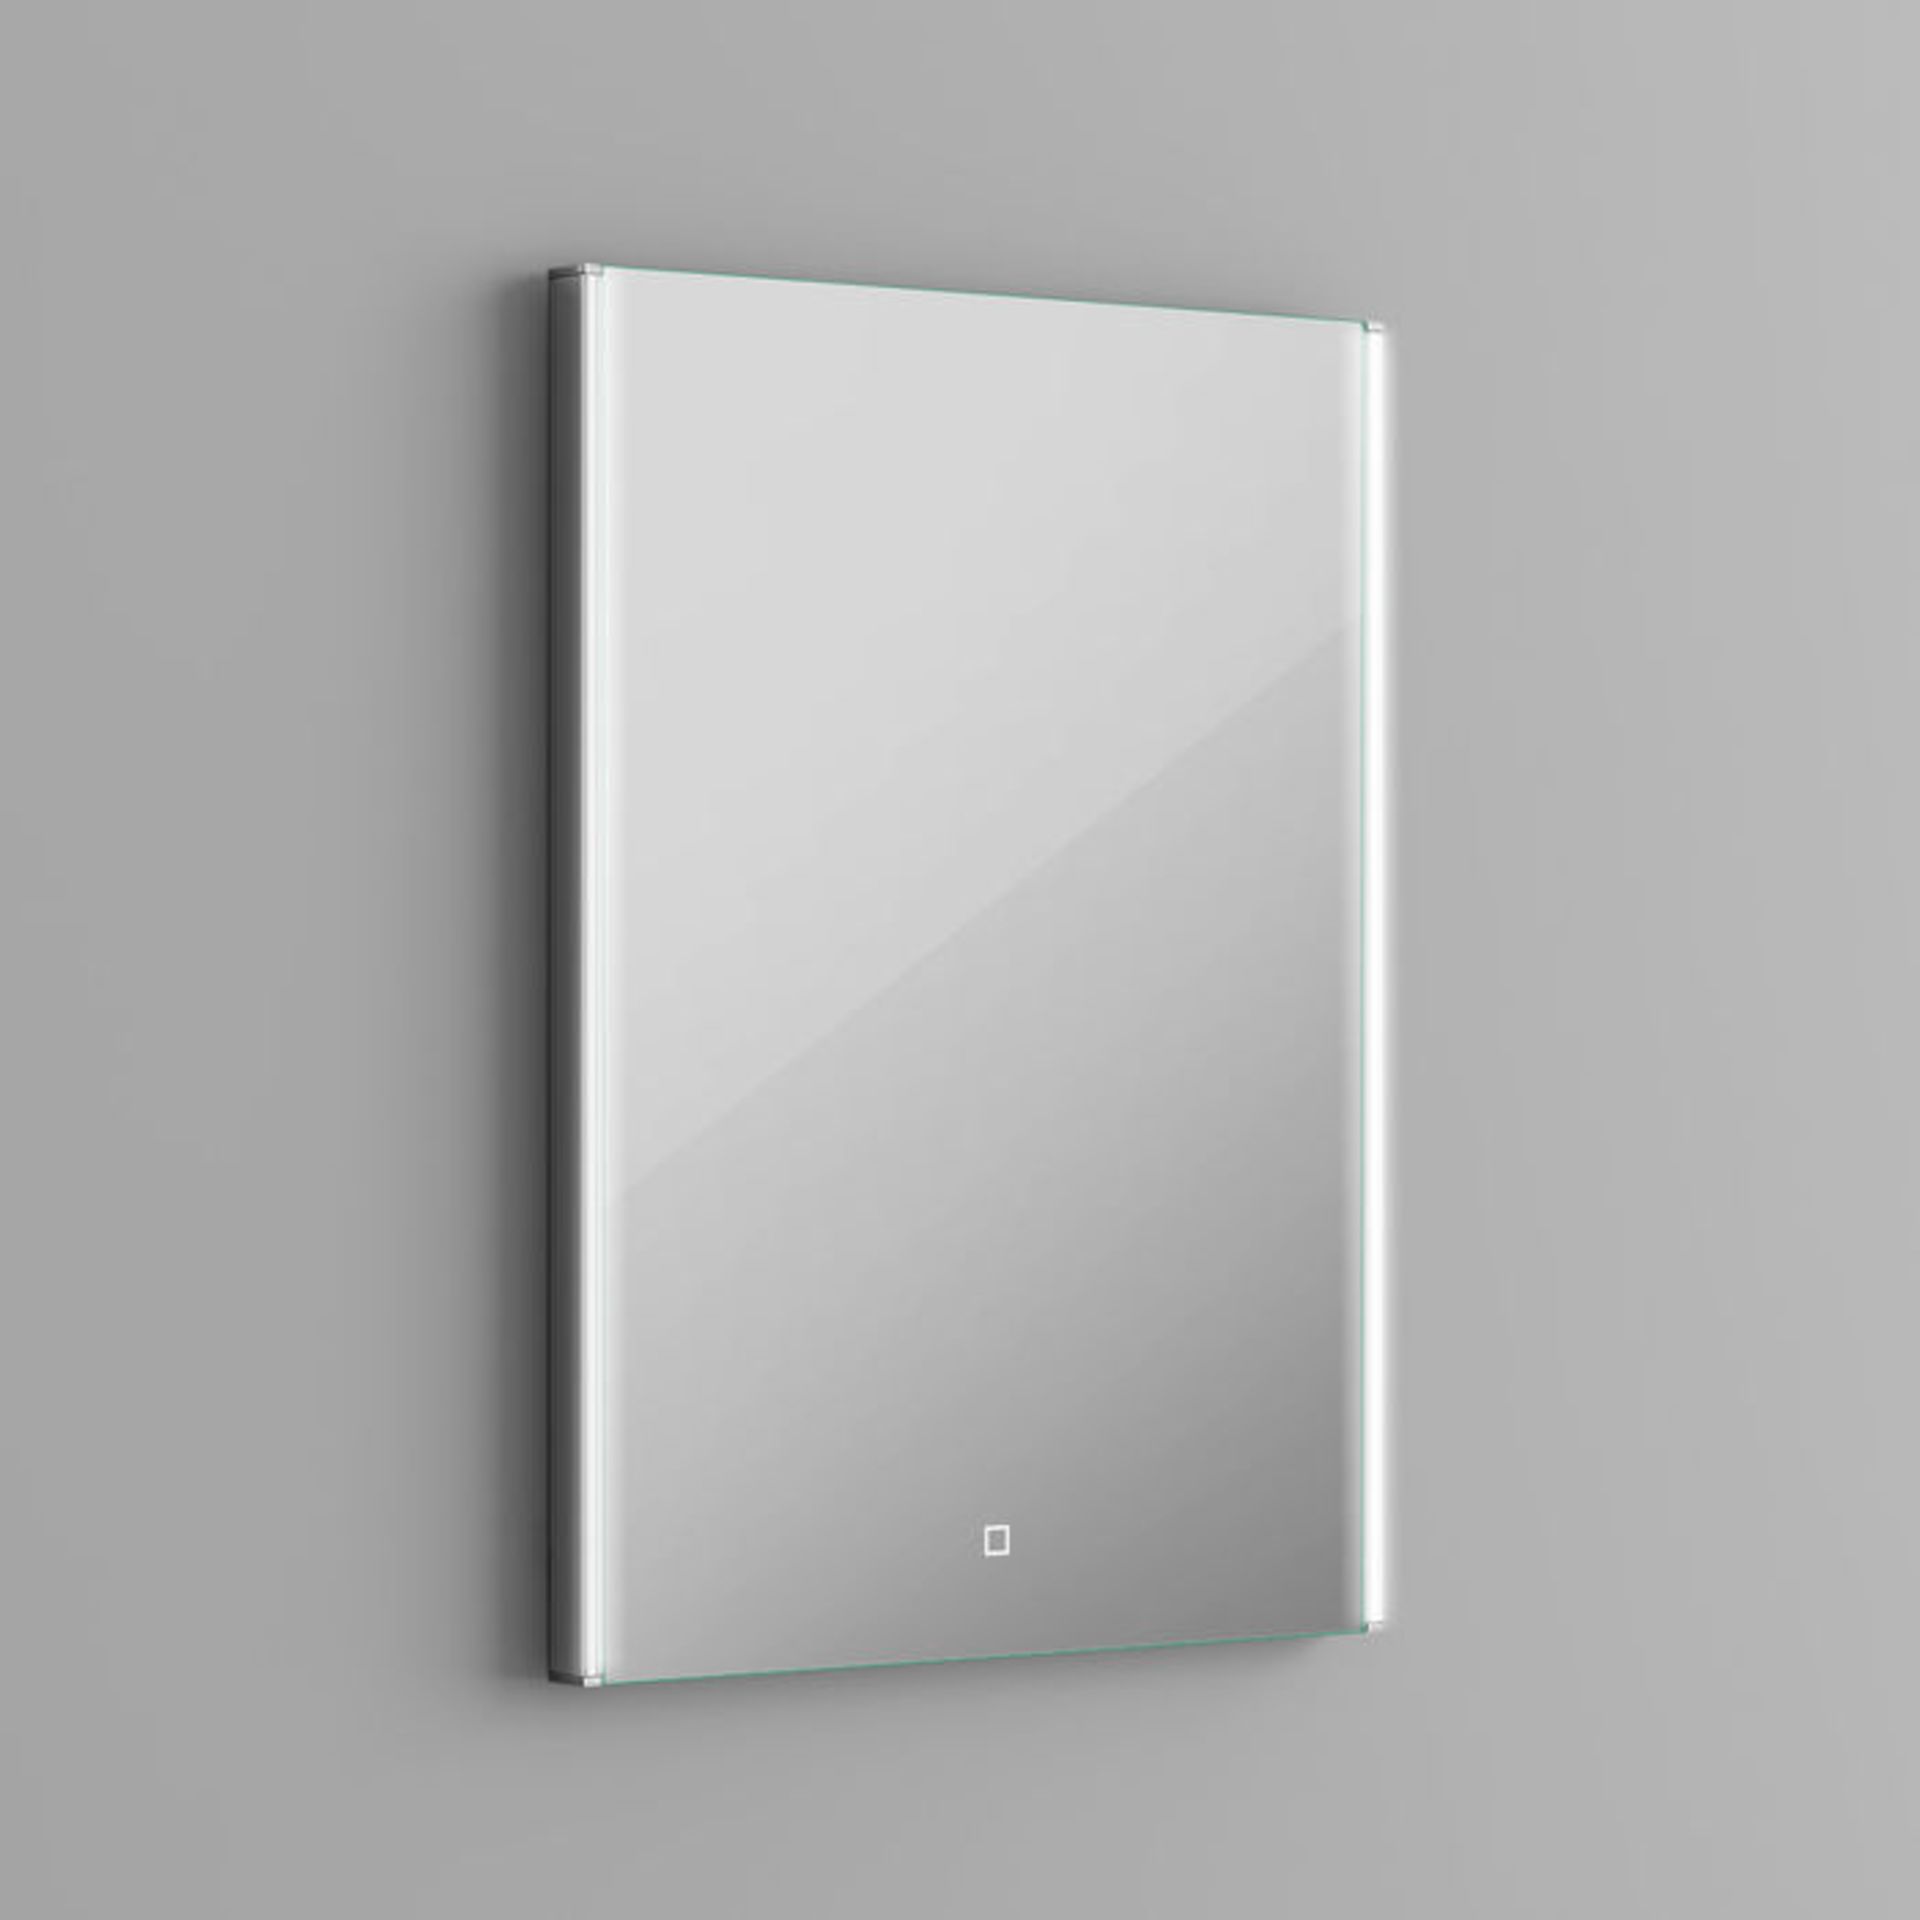 (U180) 700x500mm Denver Illuminated LED Mirror - Switch Control. RRP £349.99. Energy efficient LED - Image 5 of 5